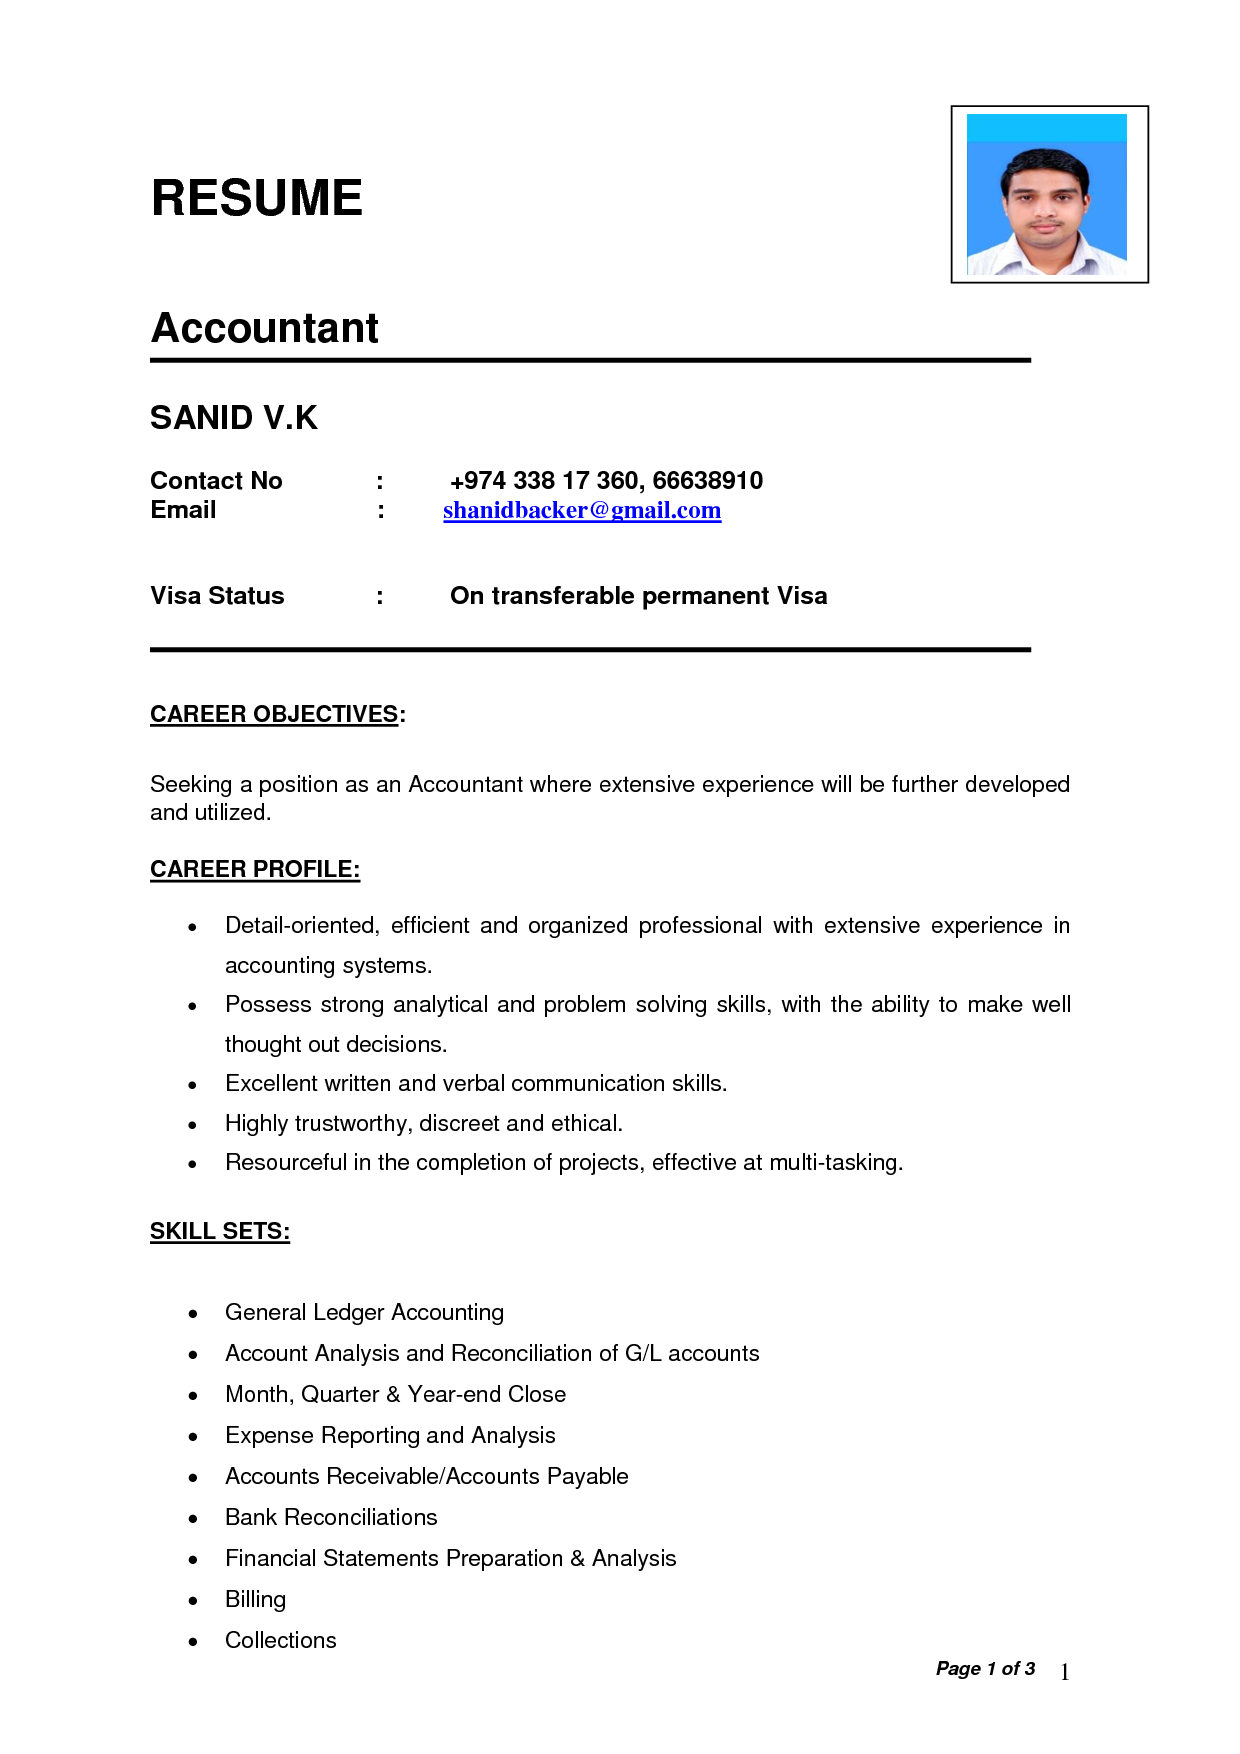 Resume Format India , format india resume ResumeFormat Resume